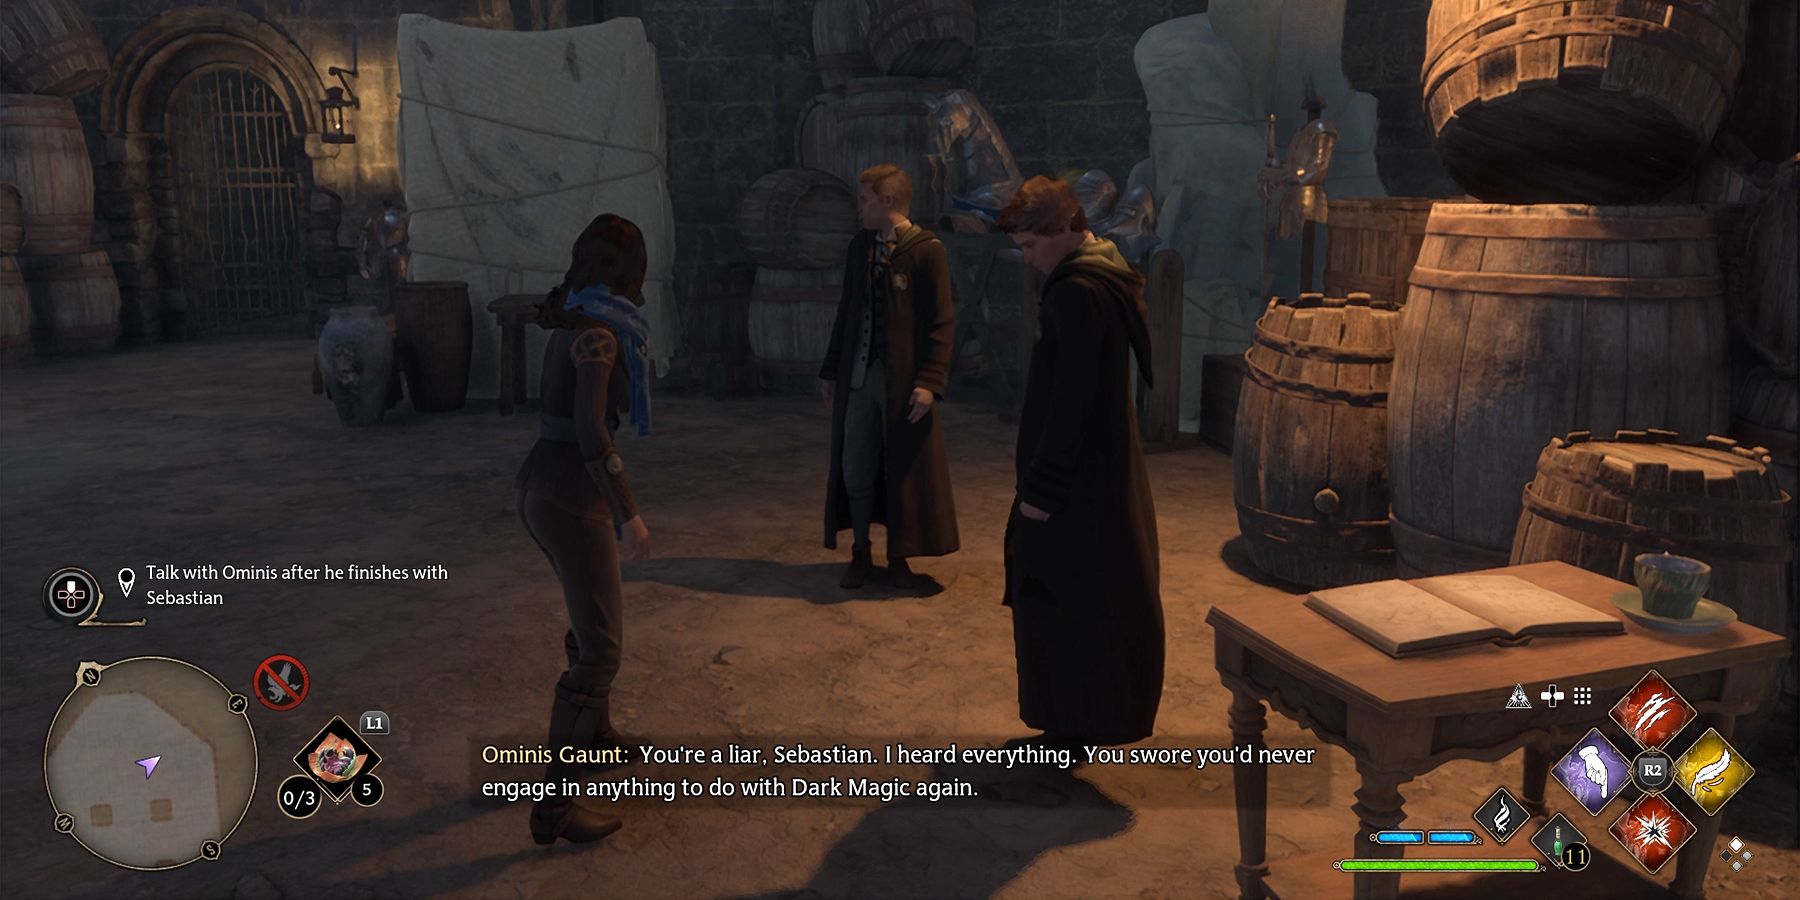 ominis arguing with sebastian in hogwarts legacy